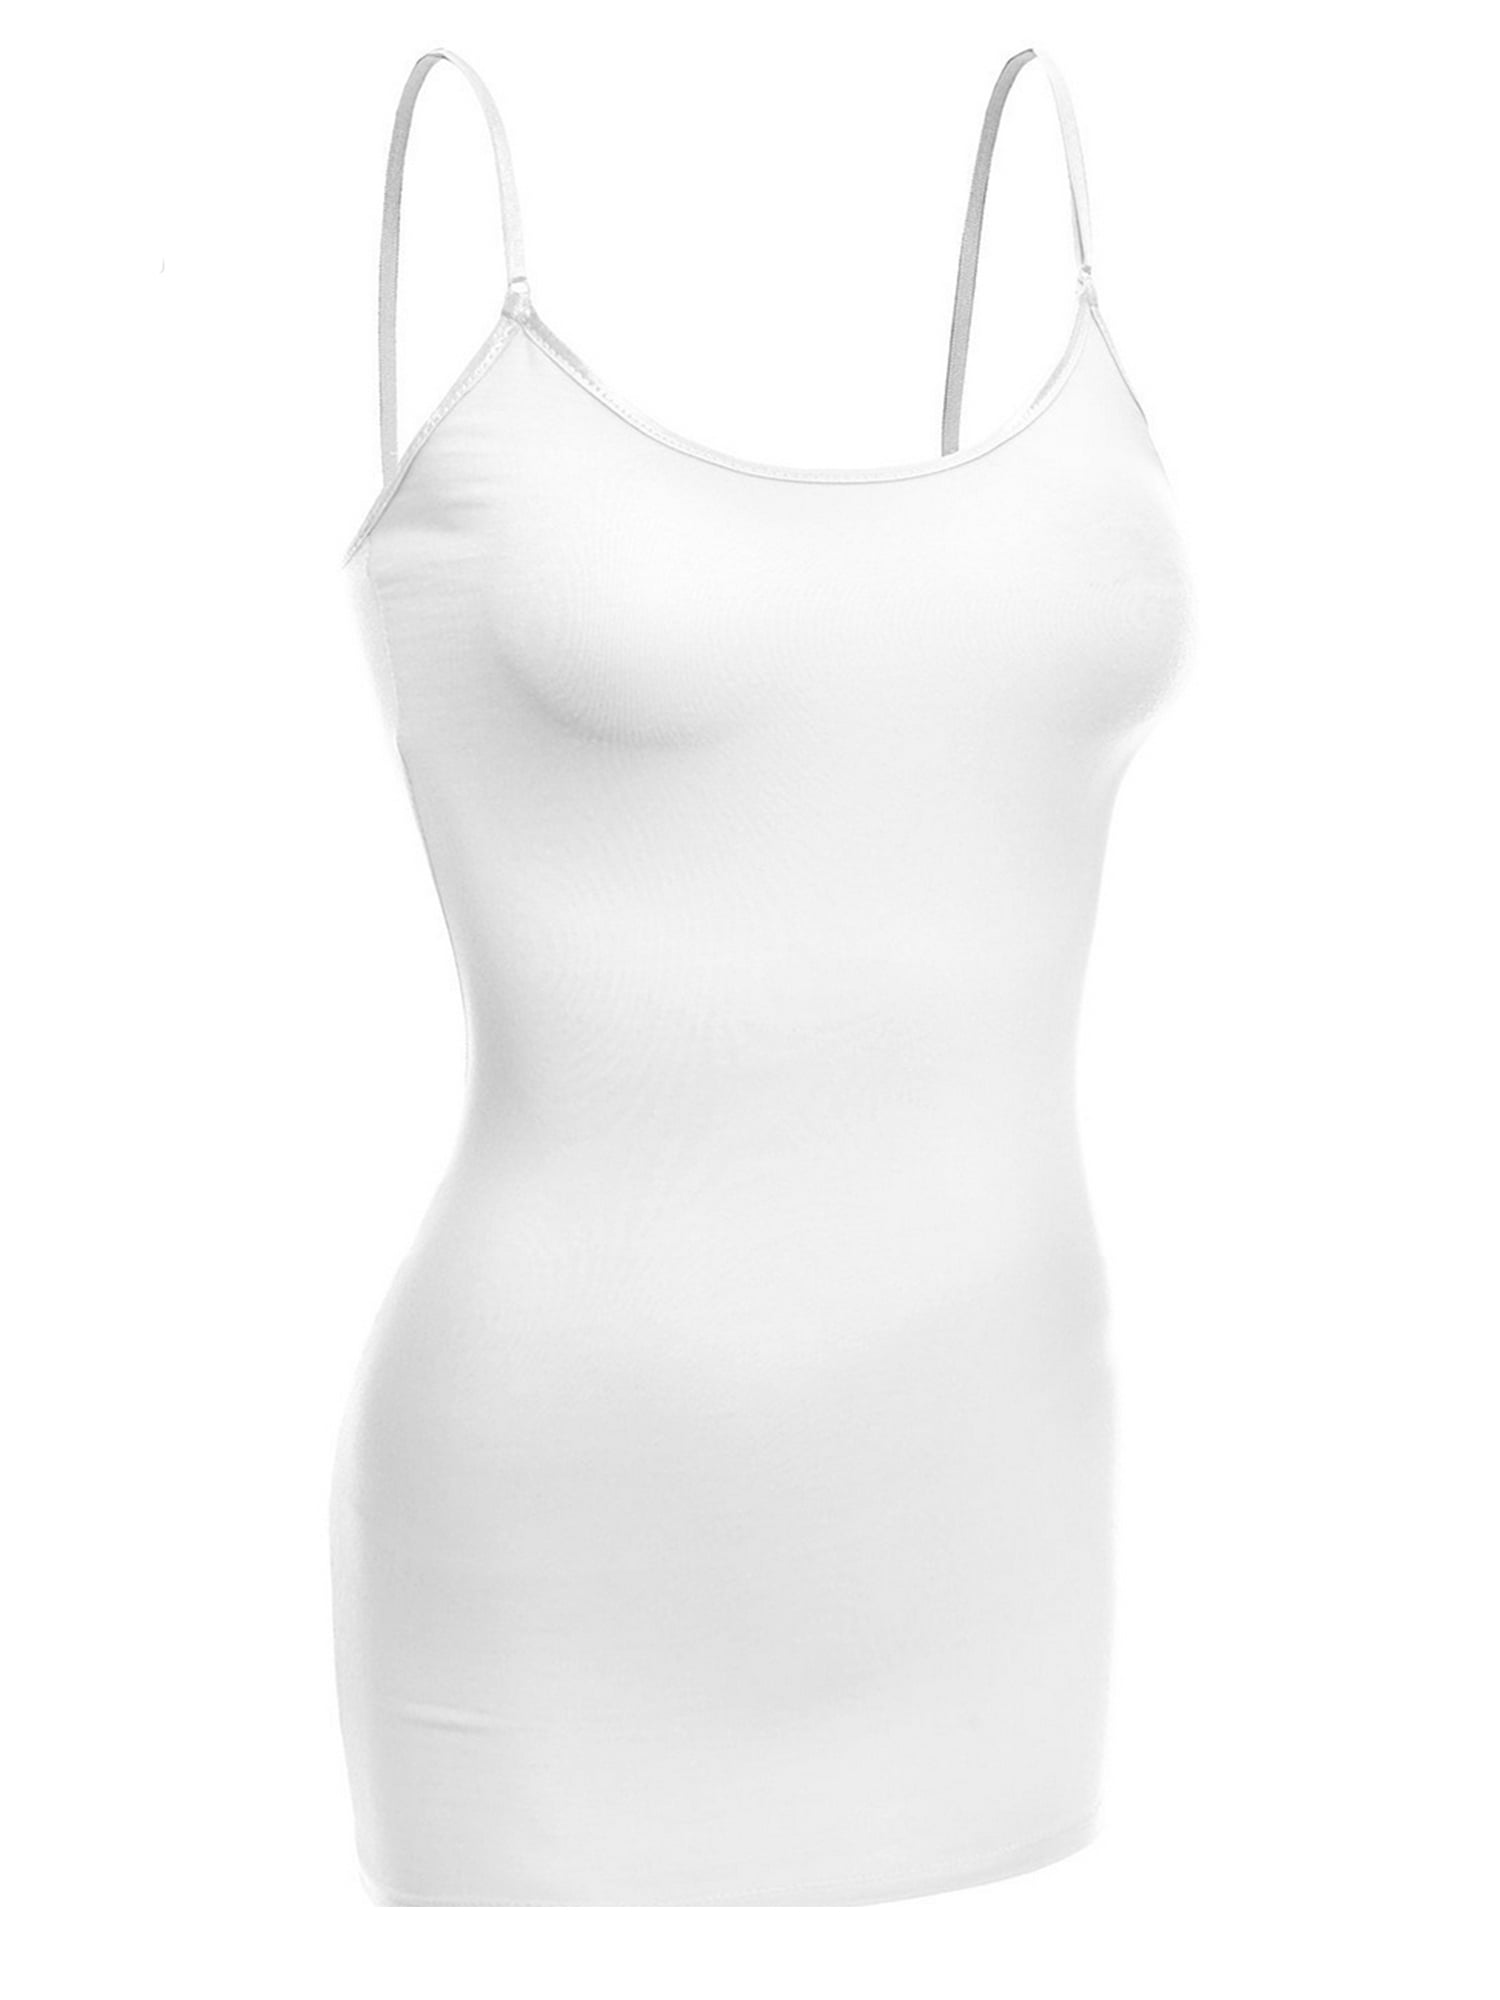 Essential Basic Women Basic Built In Bra Spaghetti Strap Cami Top Tank -  White, M